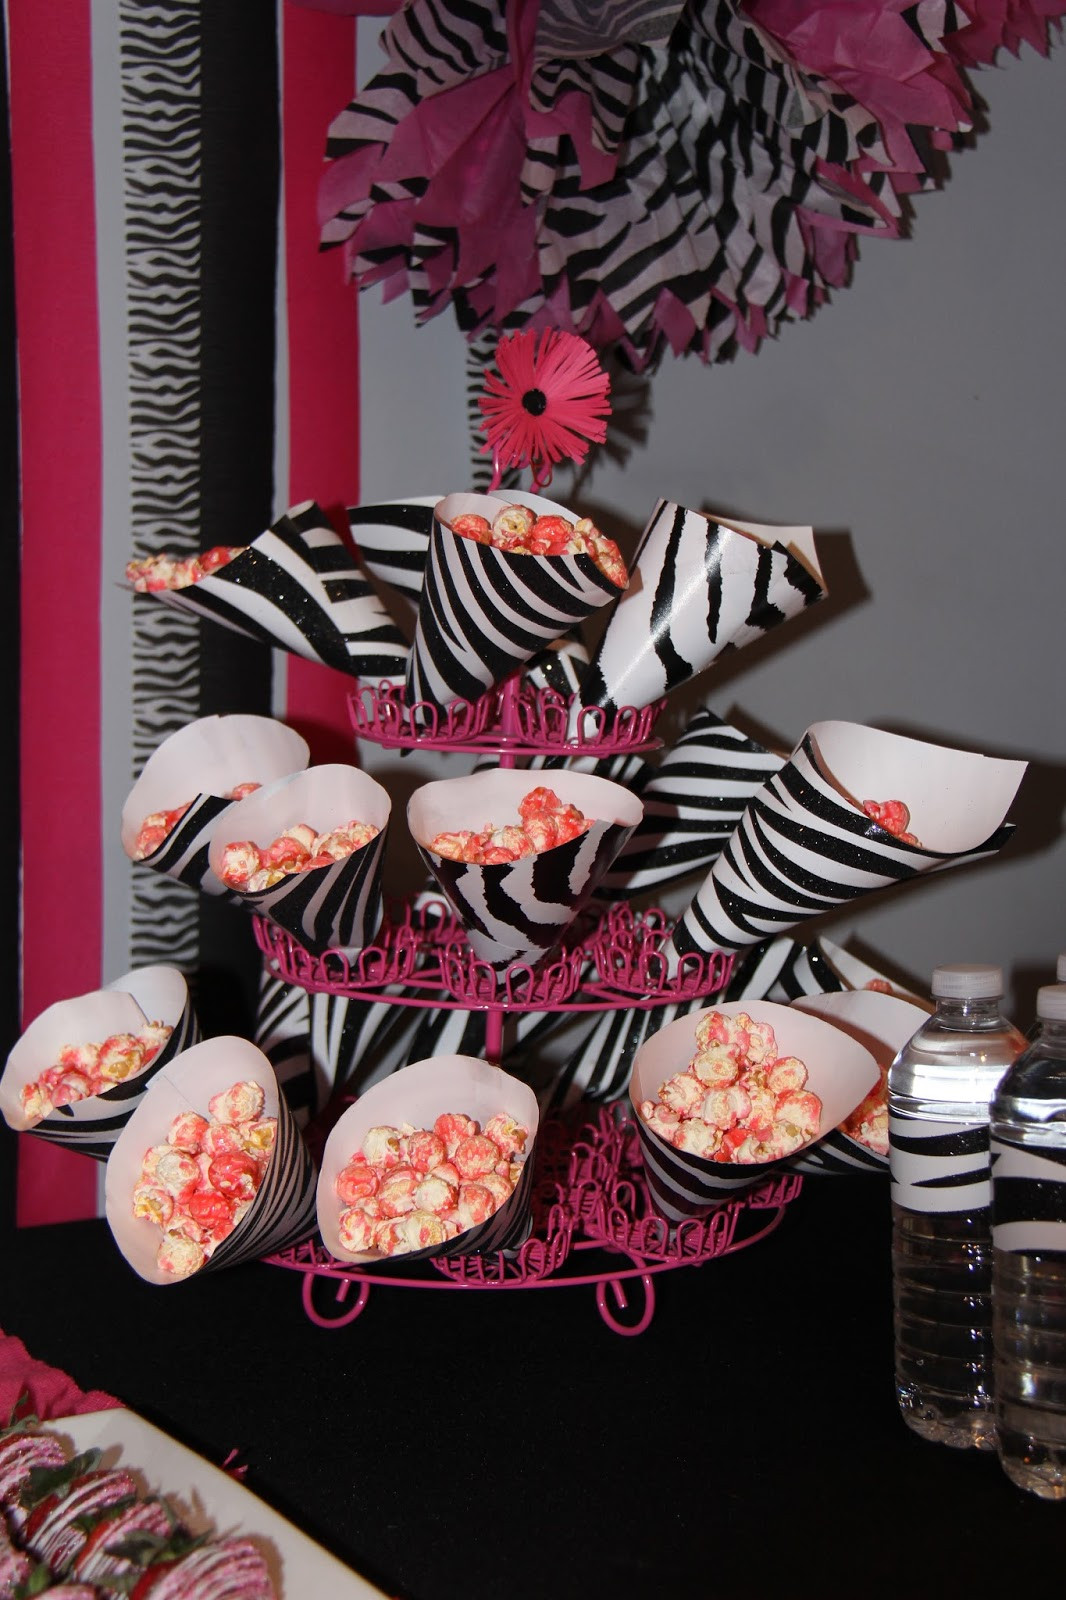 Zebra Decorations For Birthday Party
 THREElittleBIRDS Hot Pink and Zebra Print Party